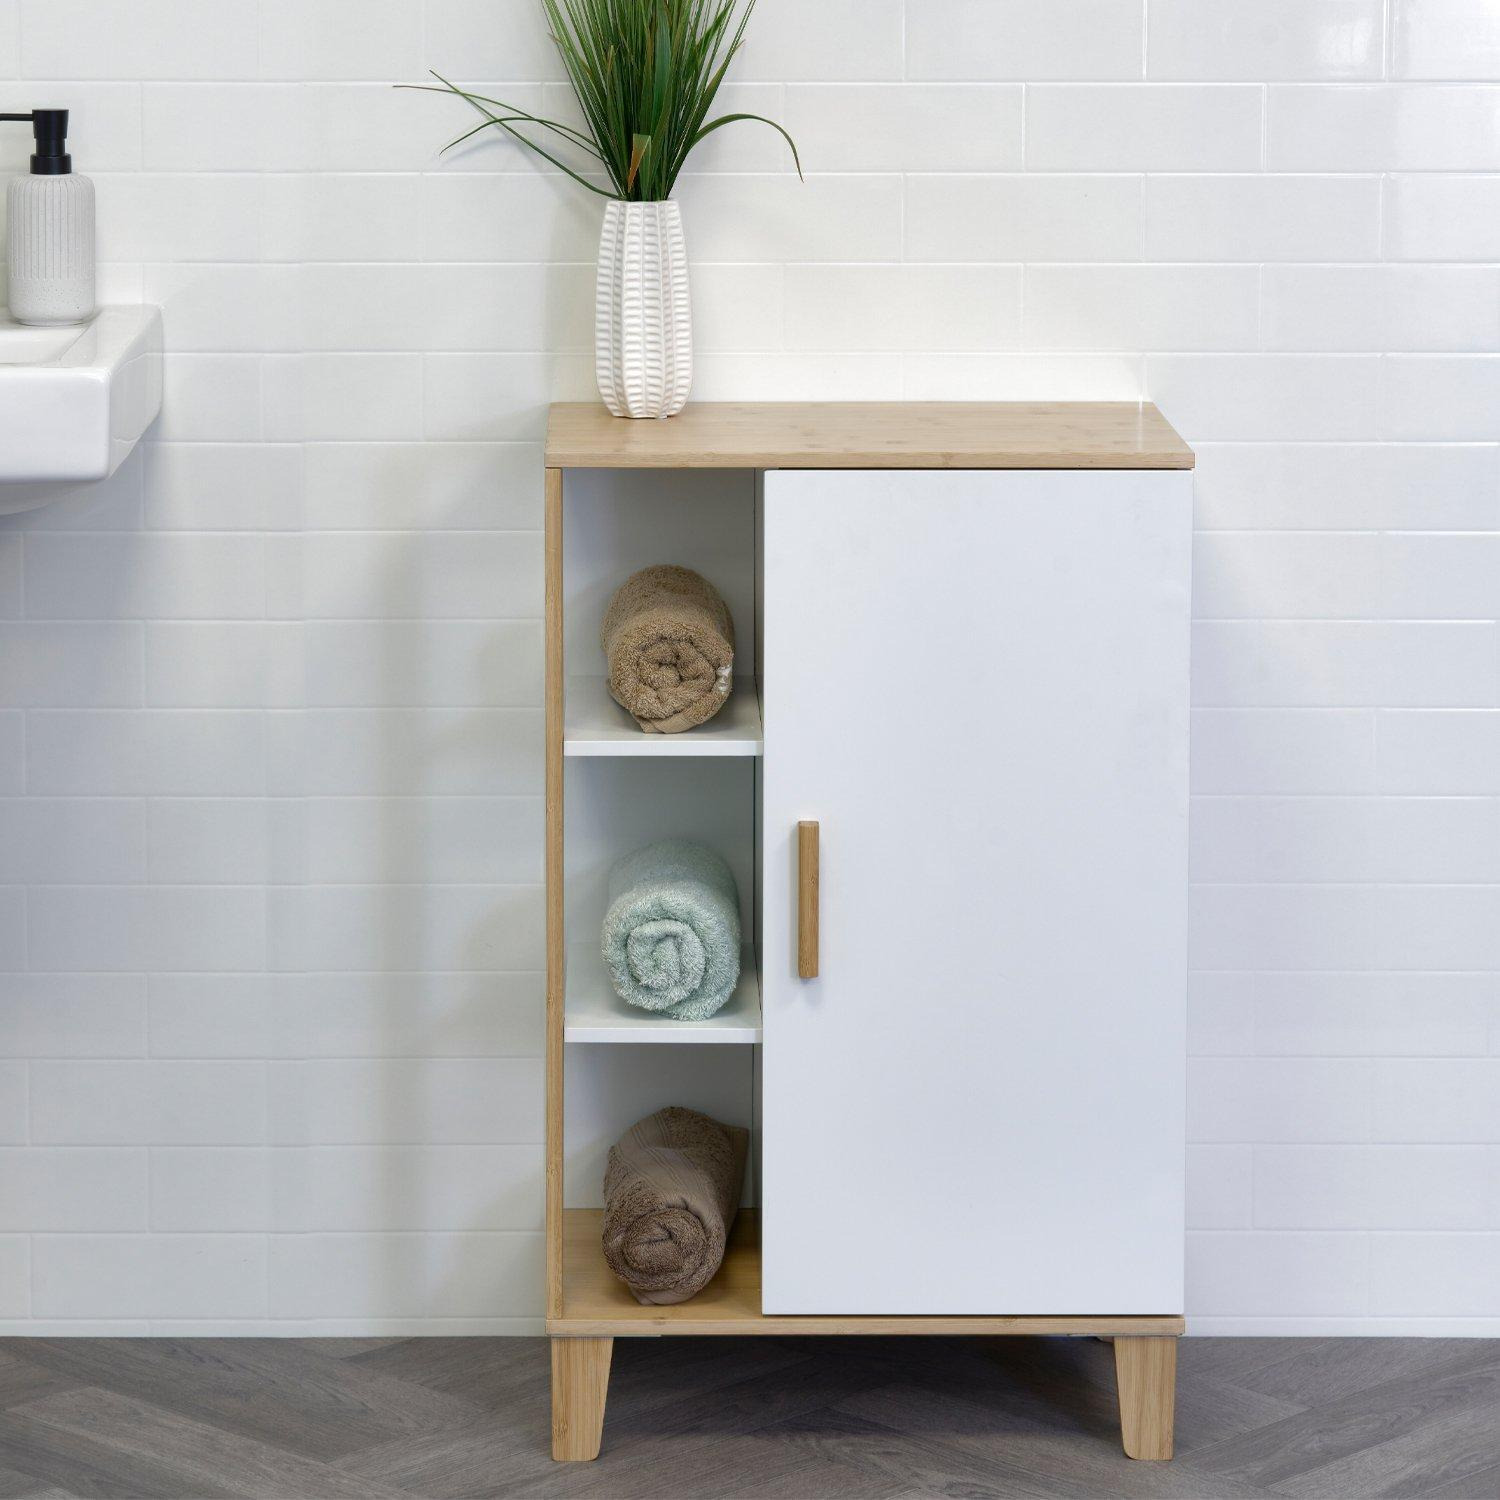 'Varallo' Single Floor Standing Bathroom Cabinet with Display Shelves - image 1